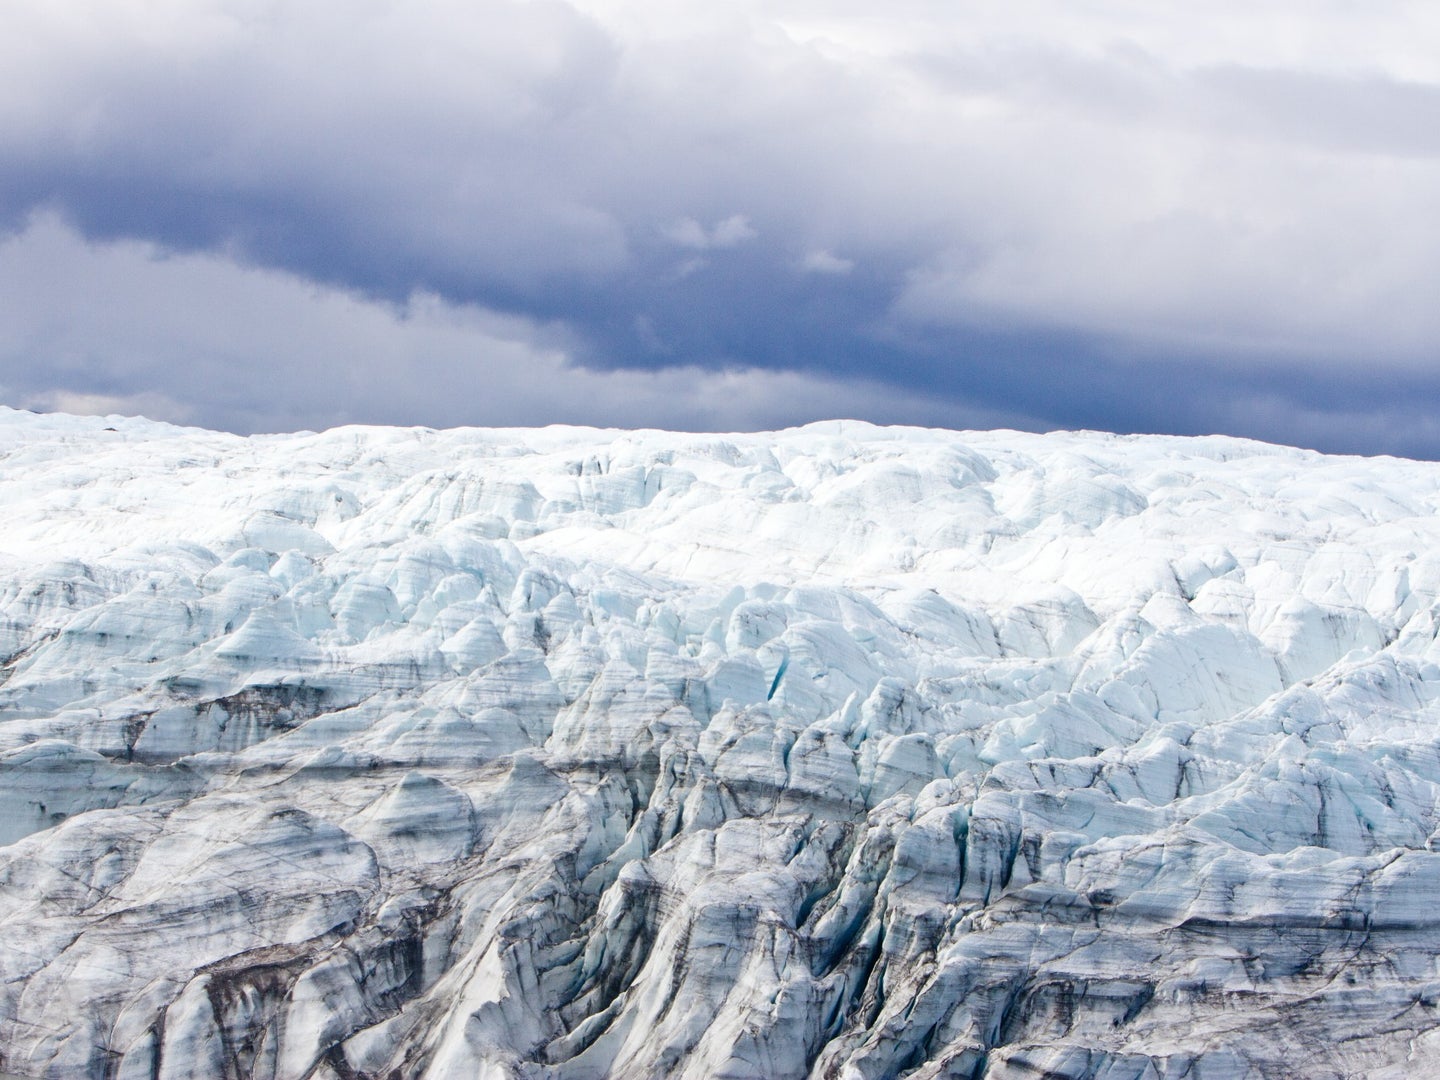 Greenland's ice sheet